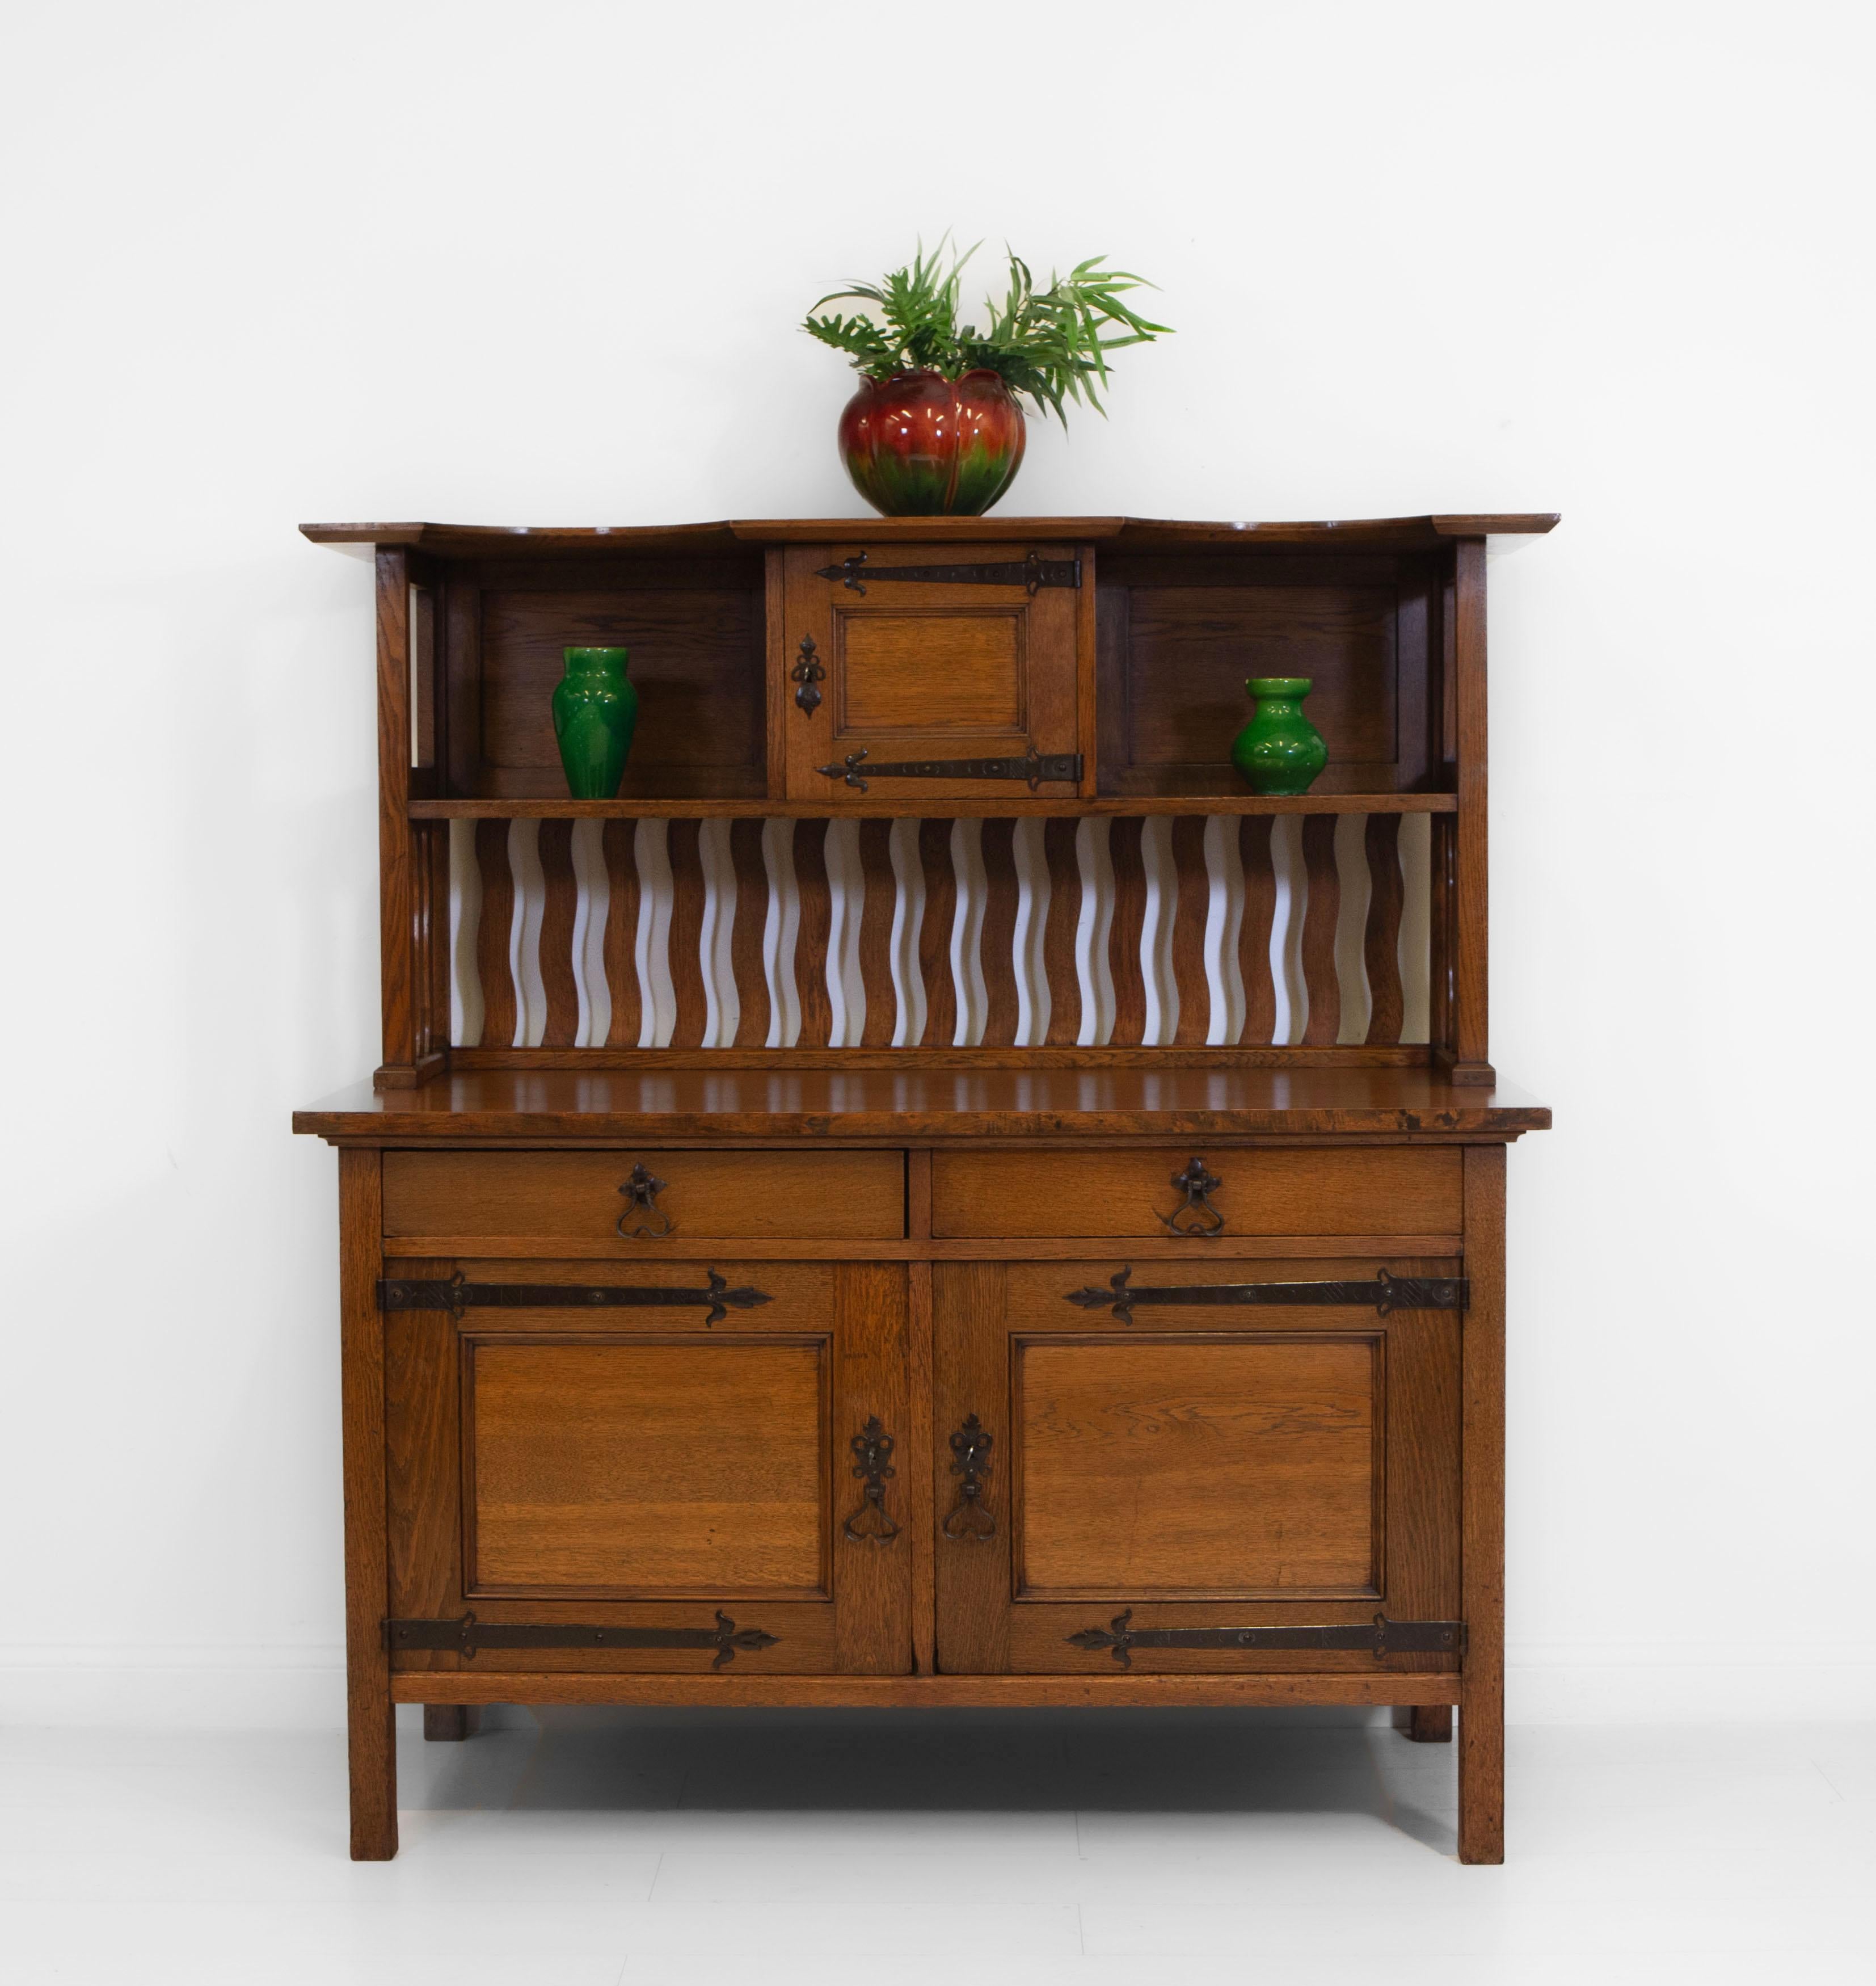 British Arts & Craft Oak Sideboard Cabinet Liberty & Co Style Circa 1900